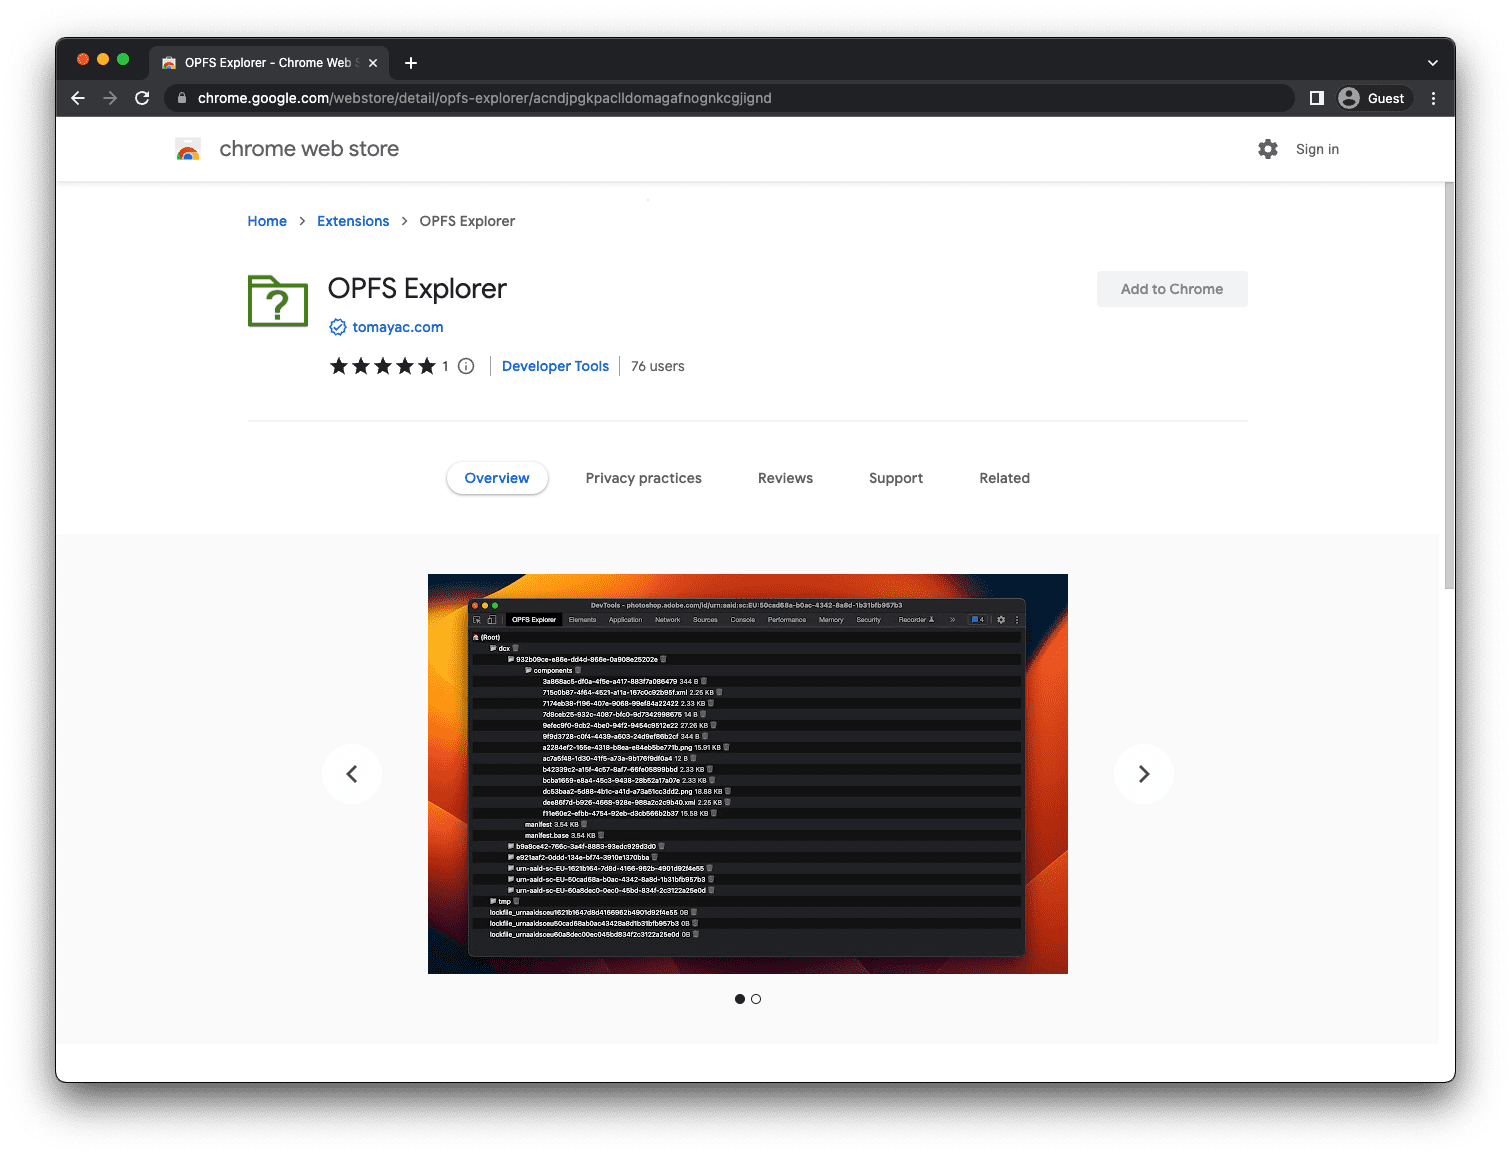 OPFS Explorer in the Chrome Web Store.